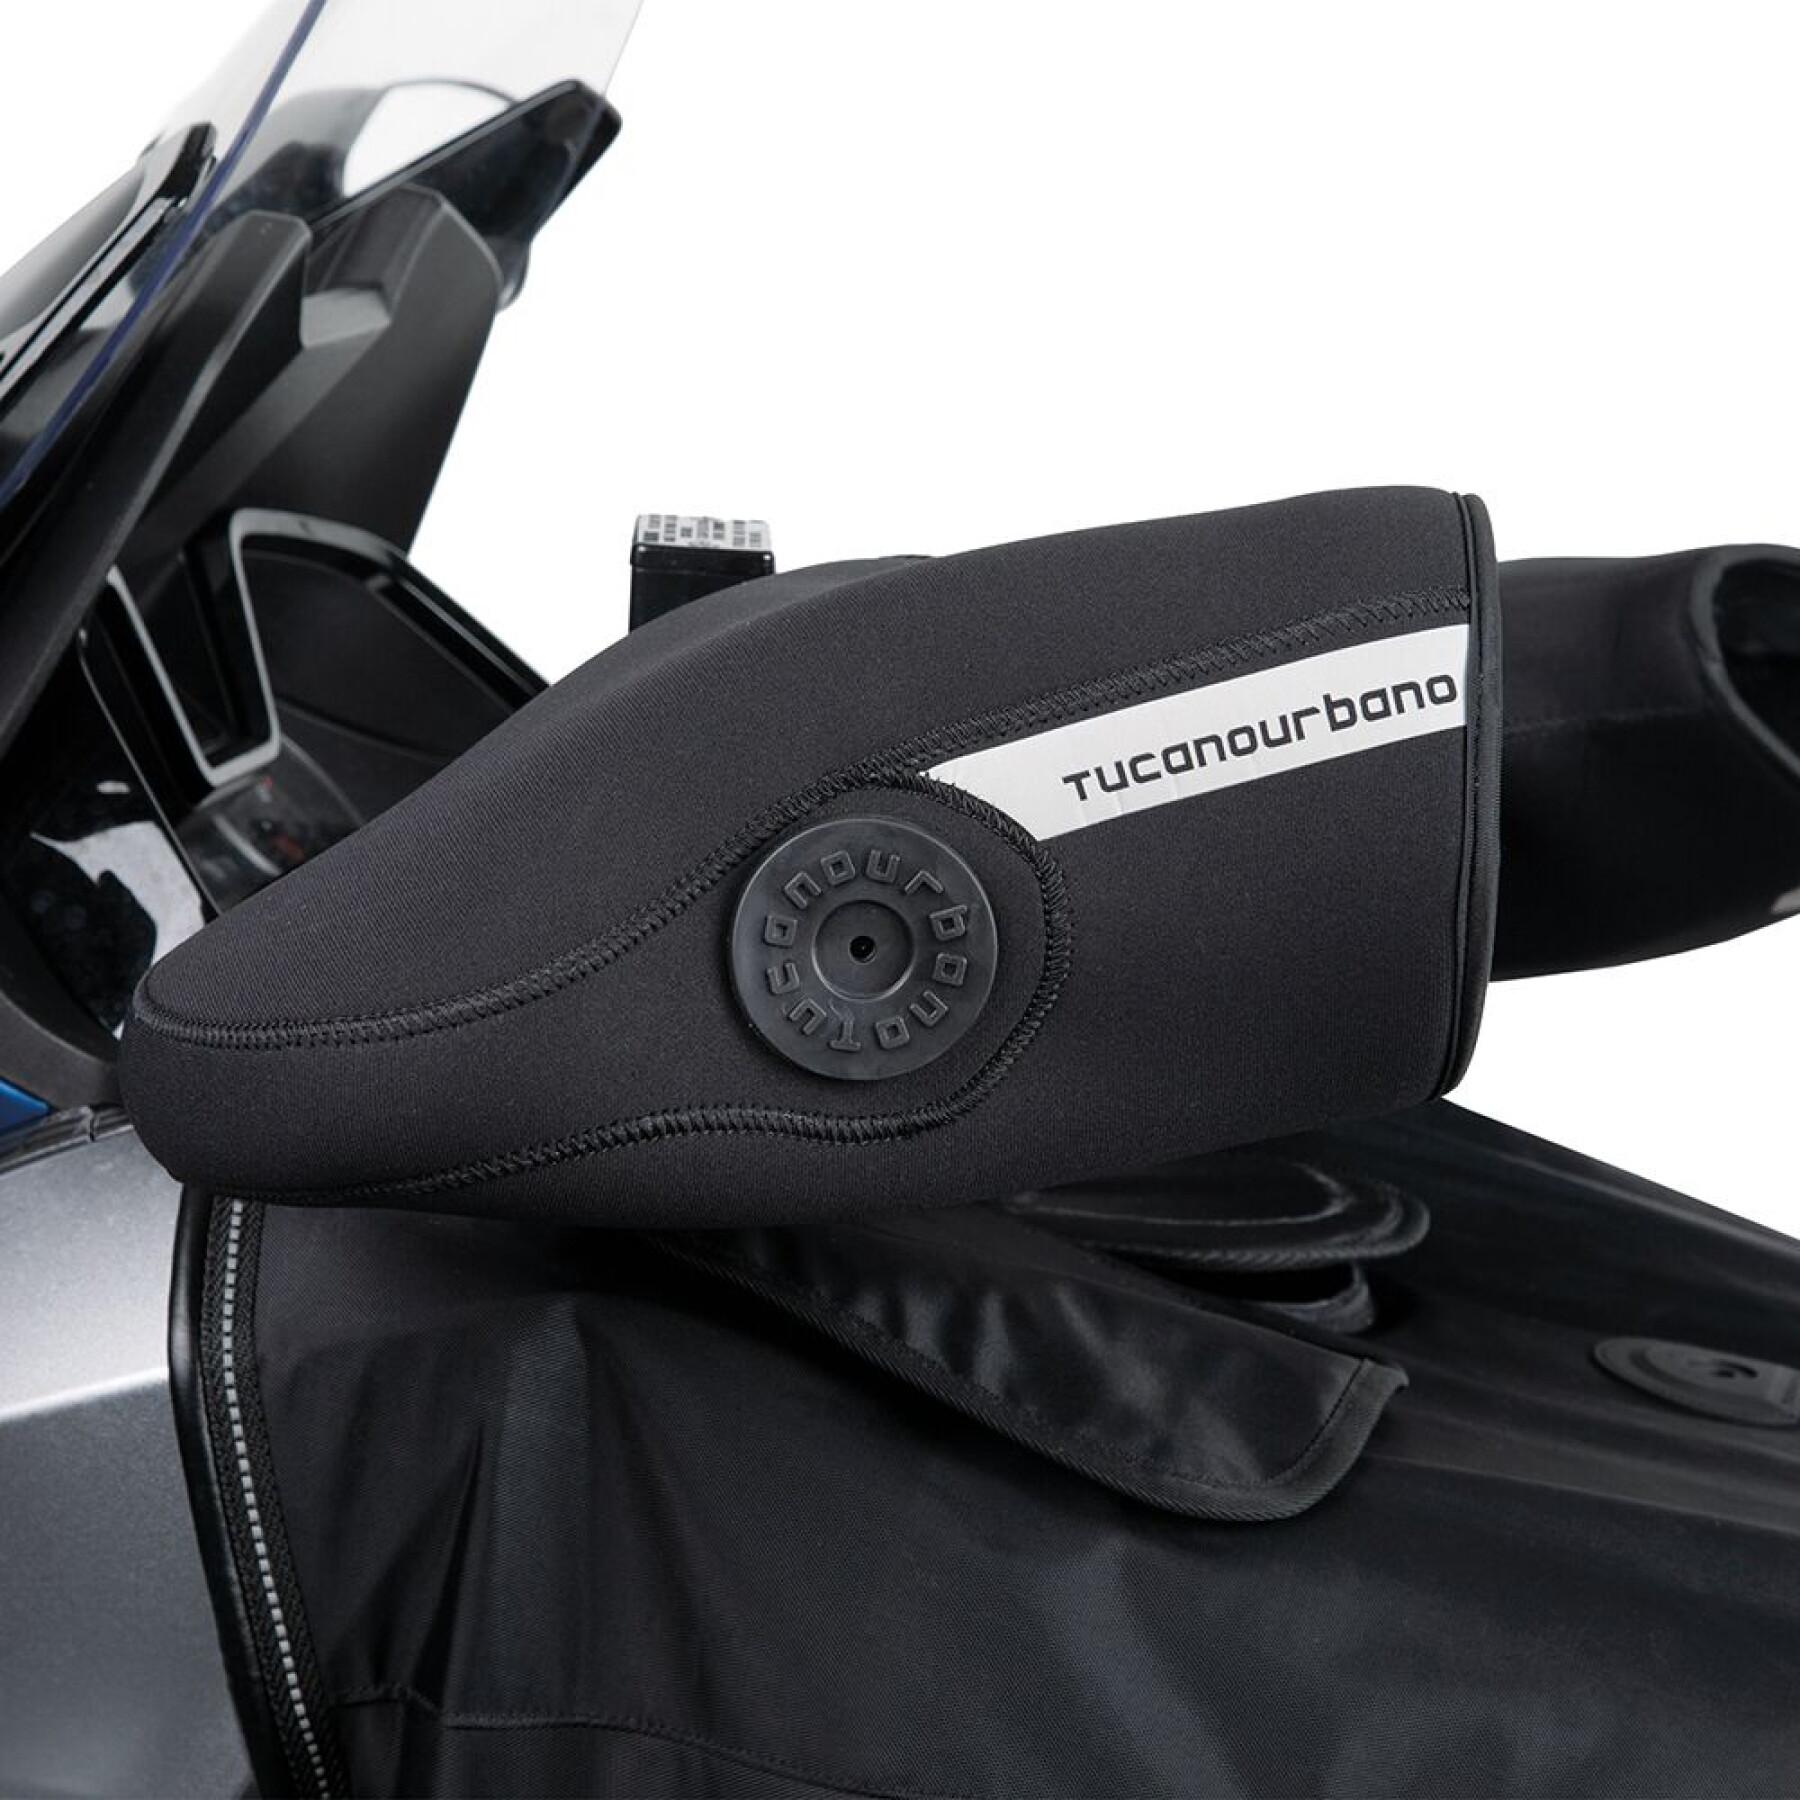 Neoprene motorcycle scooter sleeves Tucano Urbano SX R369X